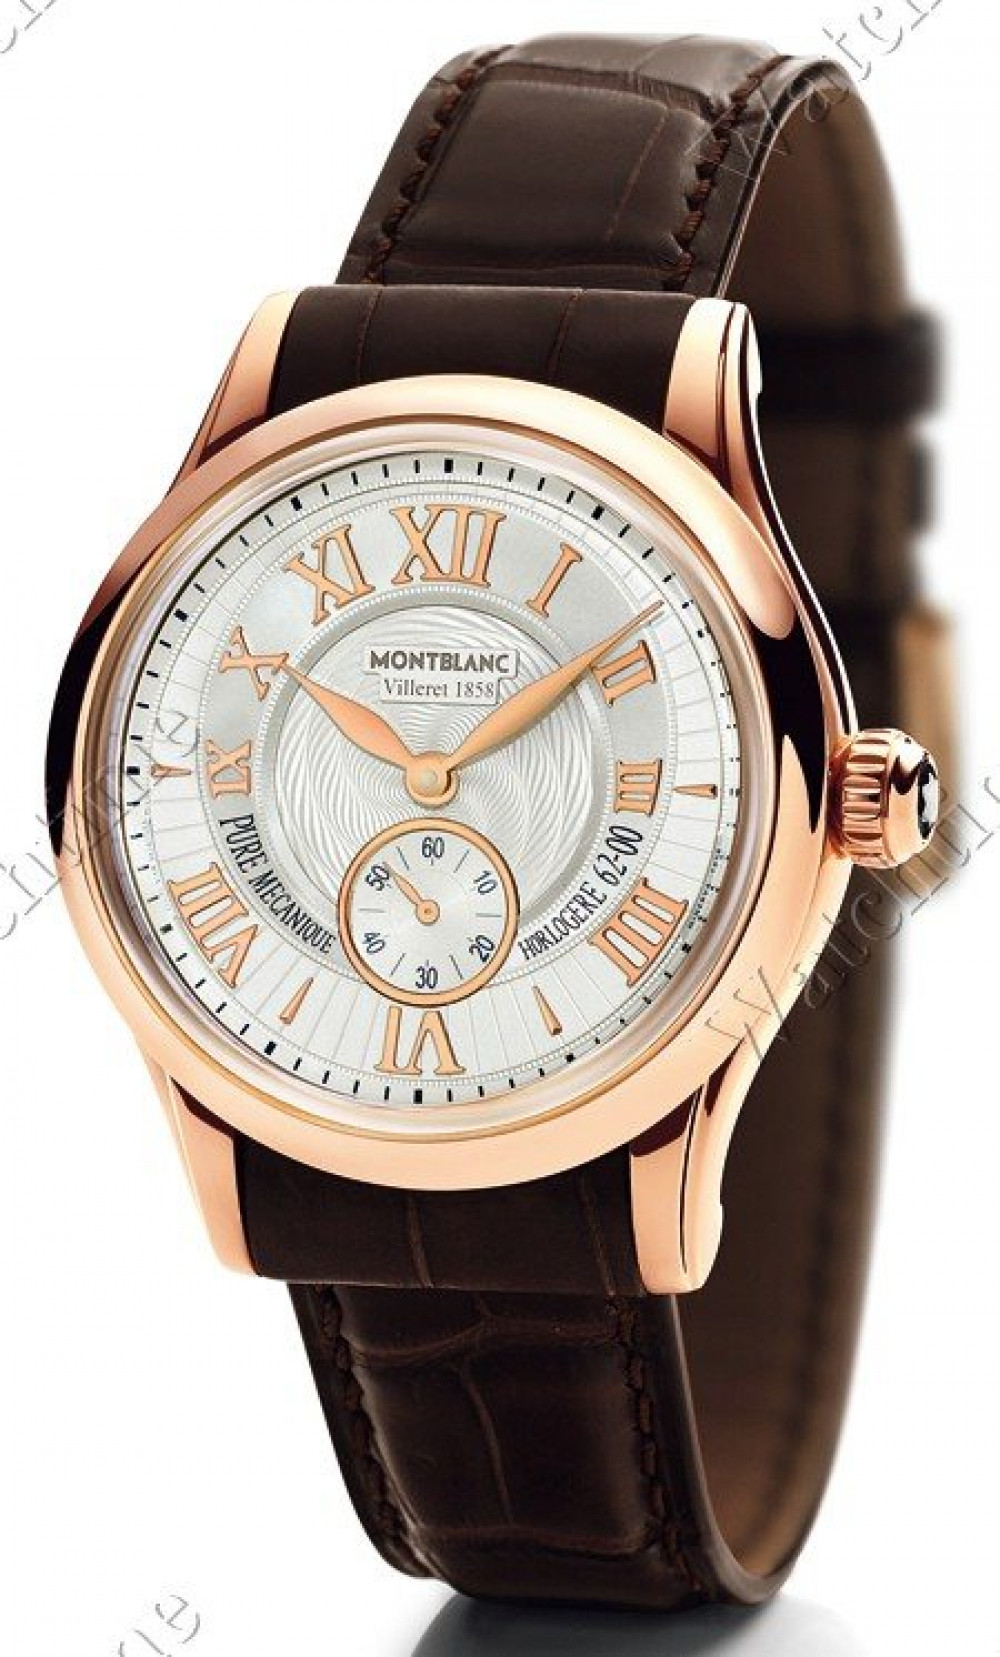 Zegarek firmy Montblanc, model Second Authentique